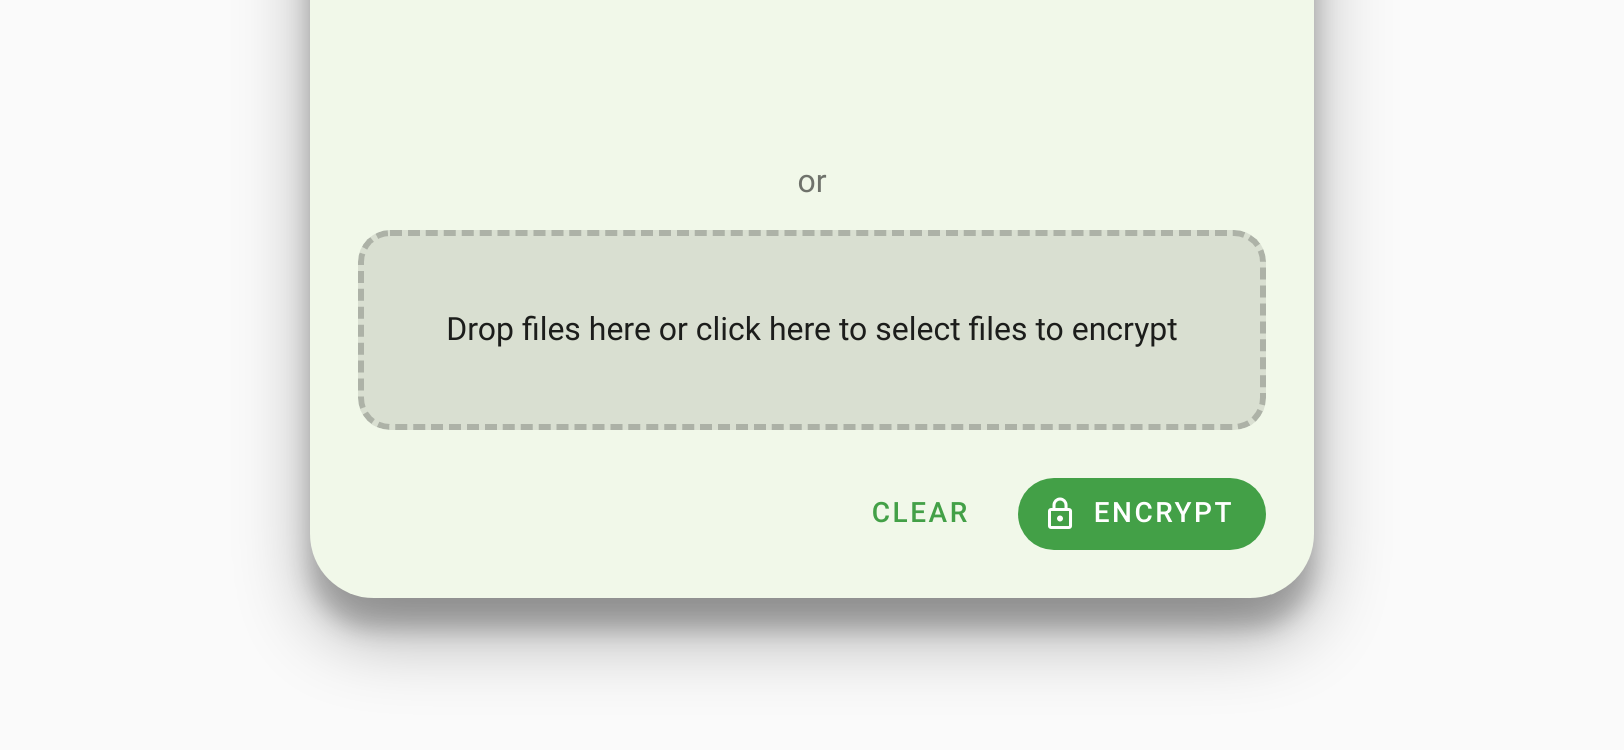 main-test-ts-encrypt-decrypt-encrypt-page-file-encryption-screenshot-812-375-1-snap.png